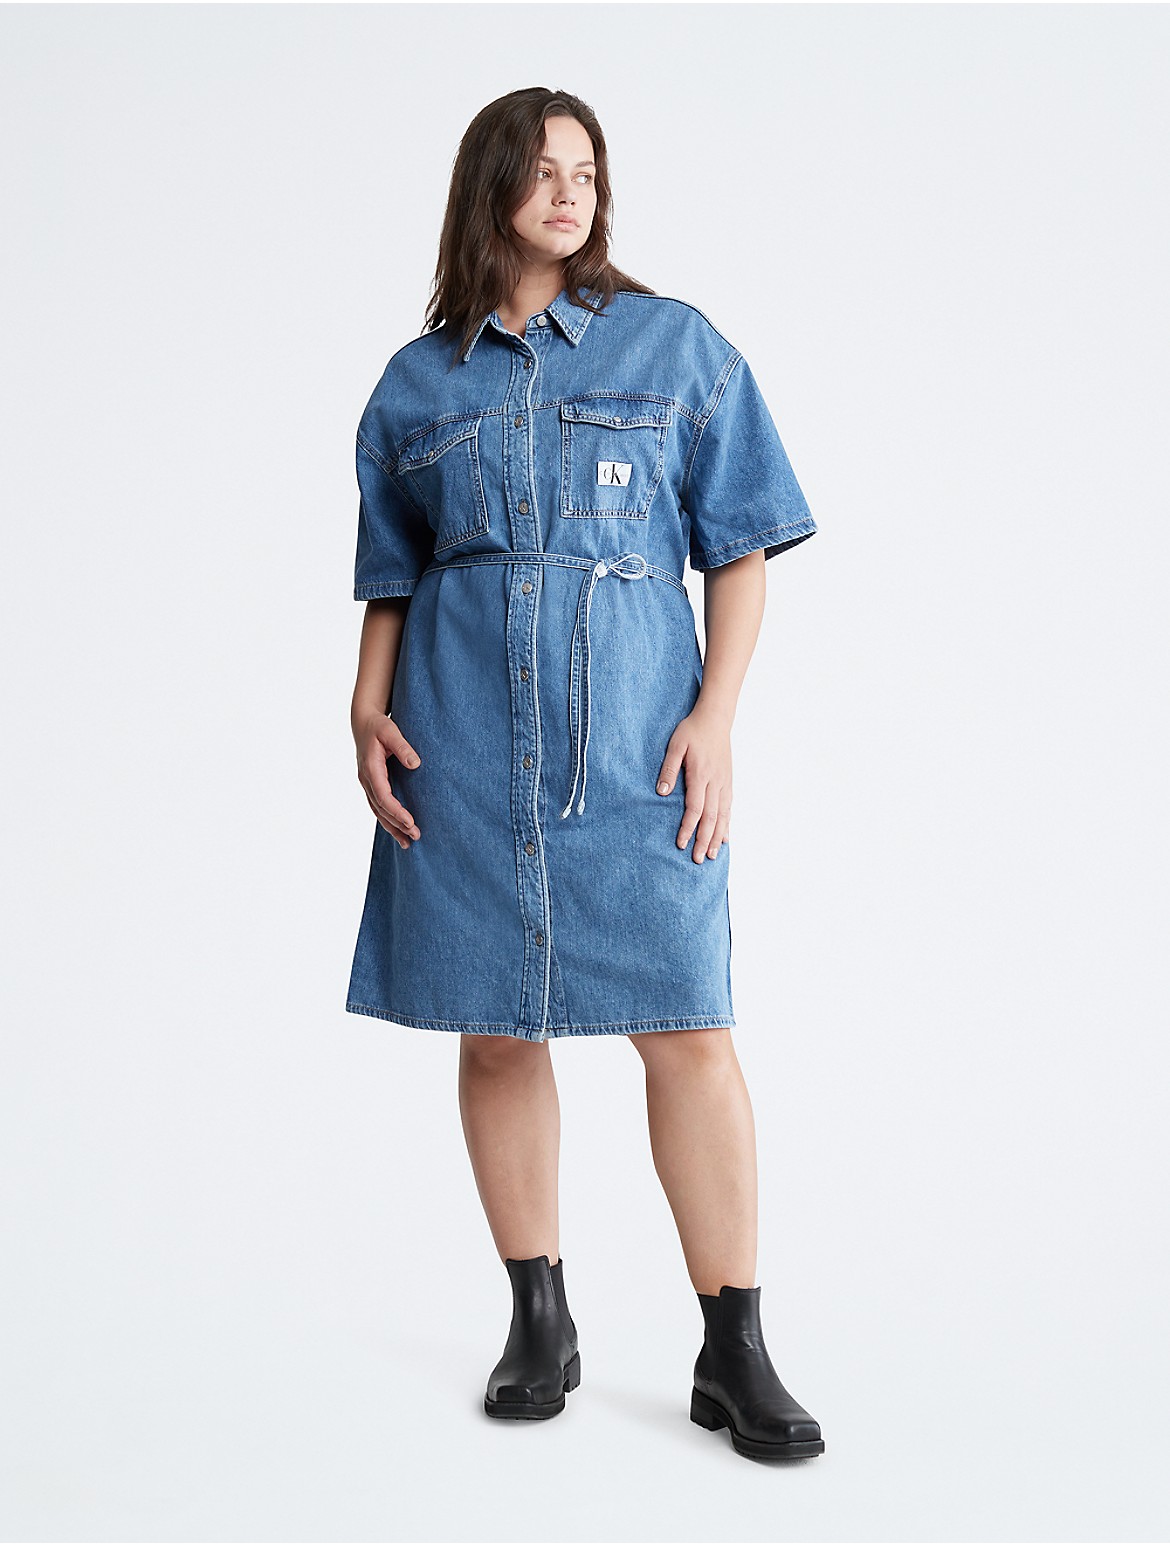 Calvin Klein Women's Plus Size Utility Denim Shirt Dress - Blue - 4X